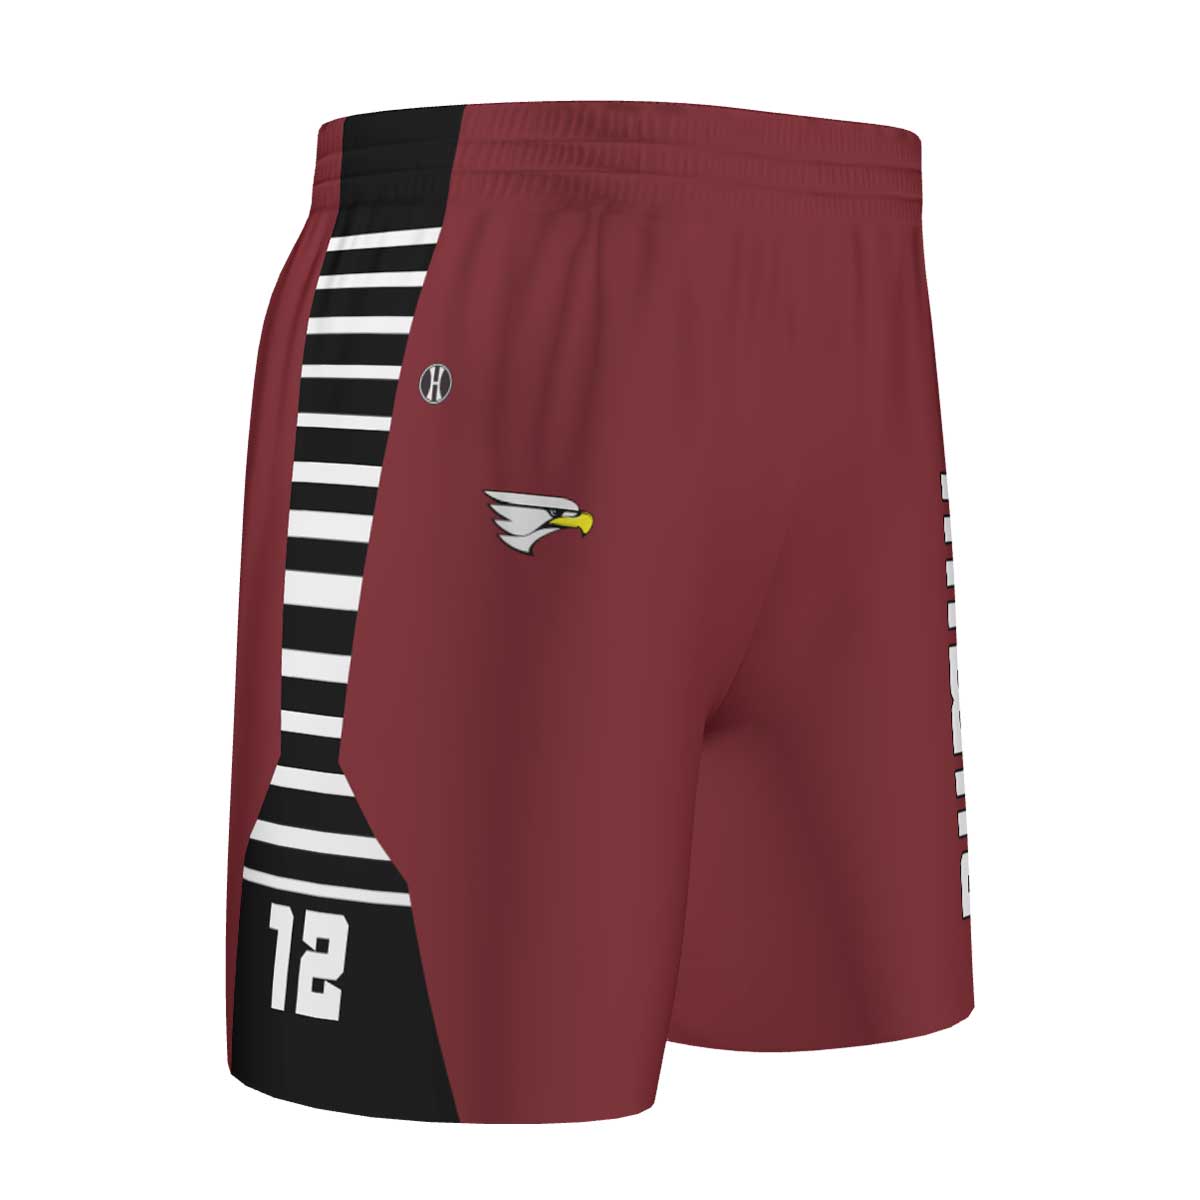 Hawks Basketball Shorts